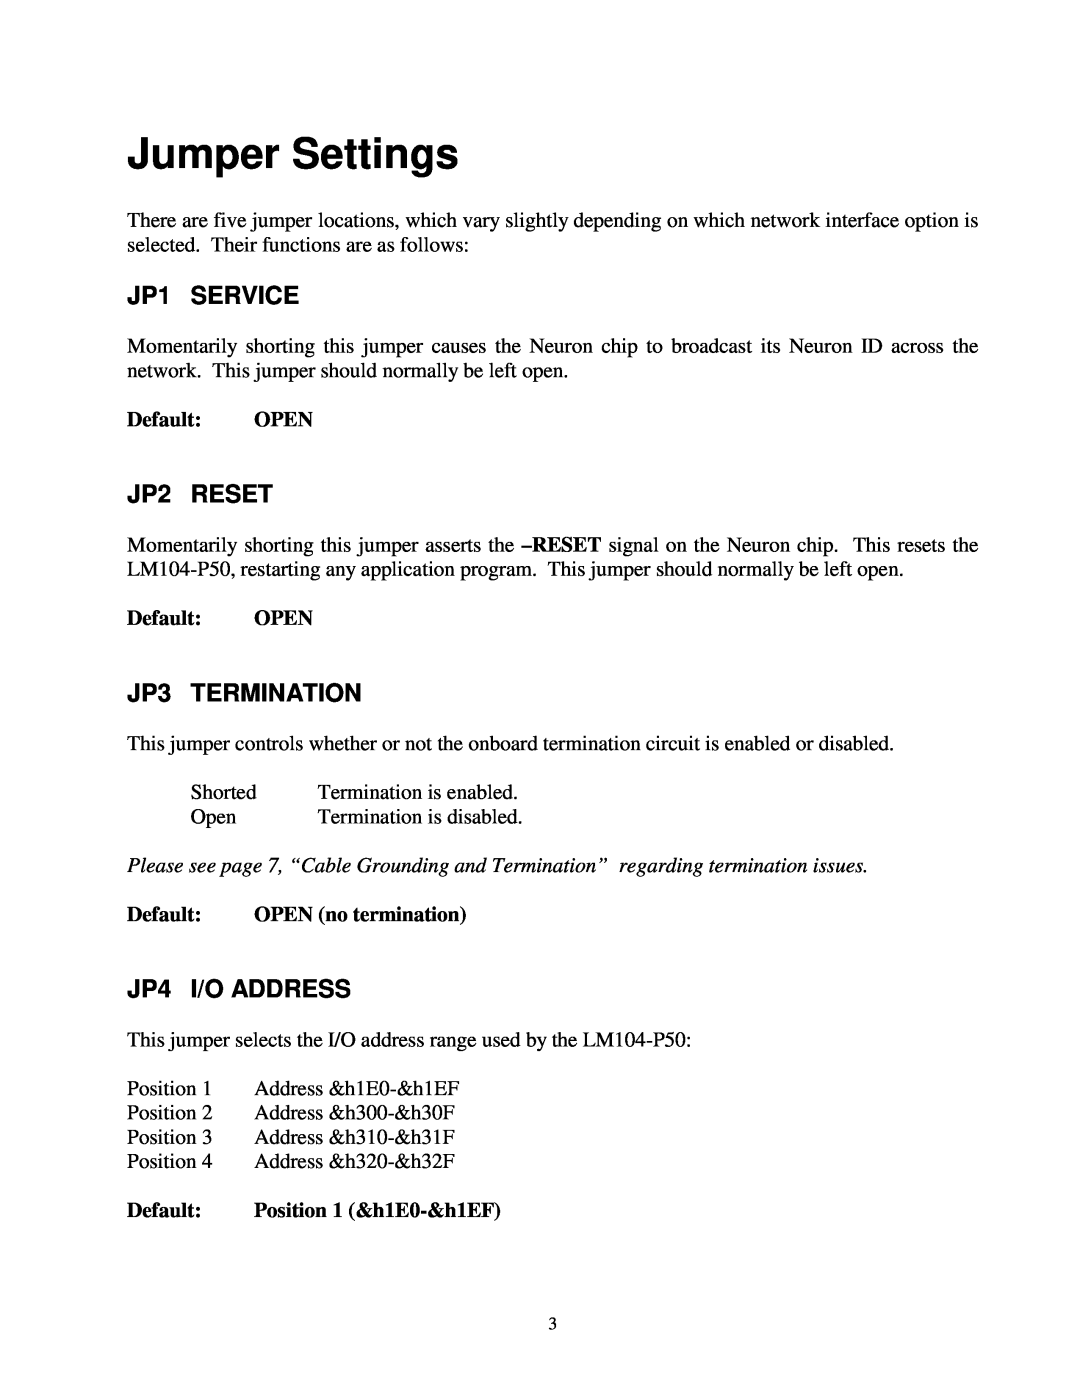 Vista LM104-P50 manual Jumper Settings, JP1 SERVICE, JP2 RESET, JP3 TERMINATION, JP4 I/O ADDRESS 